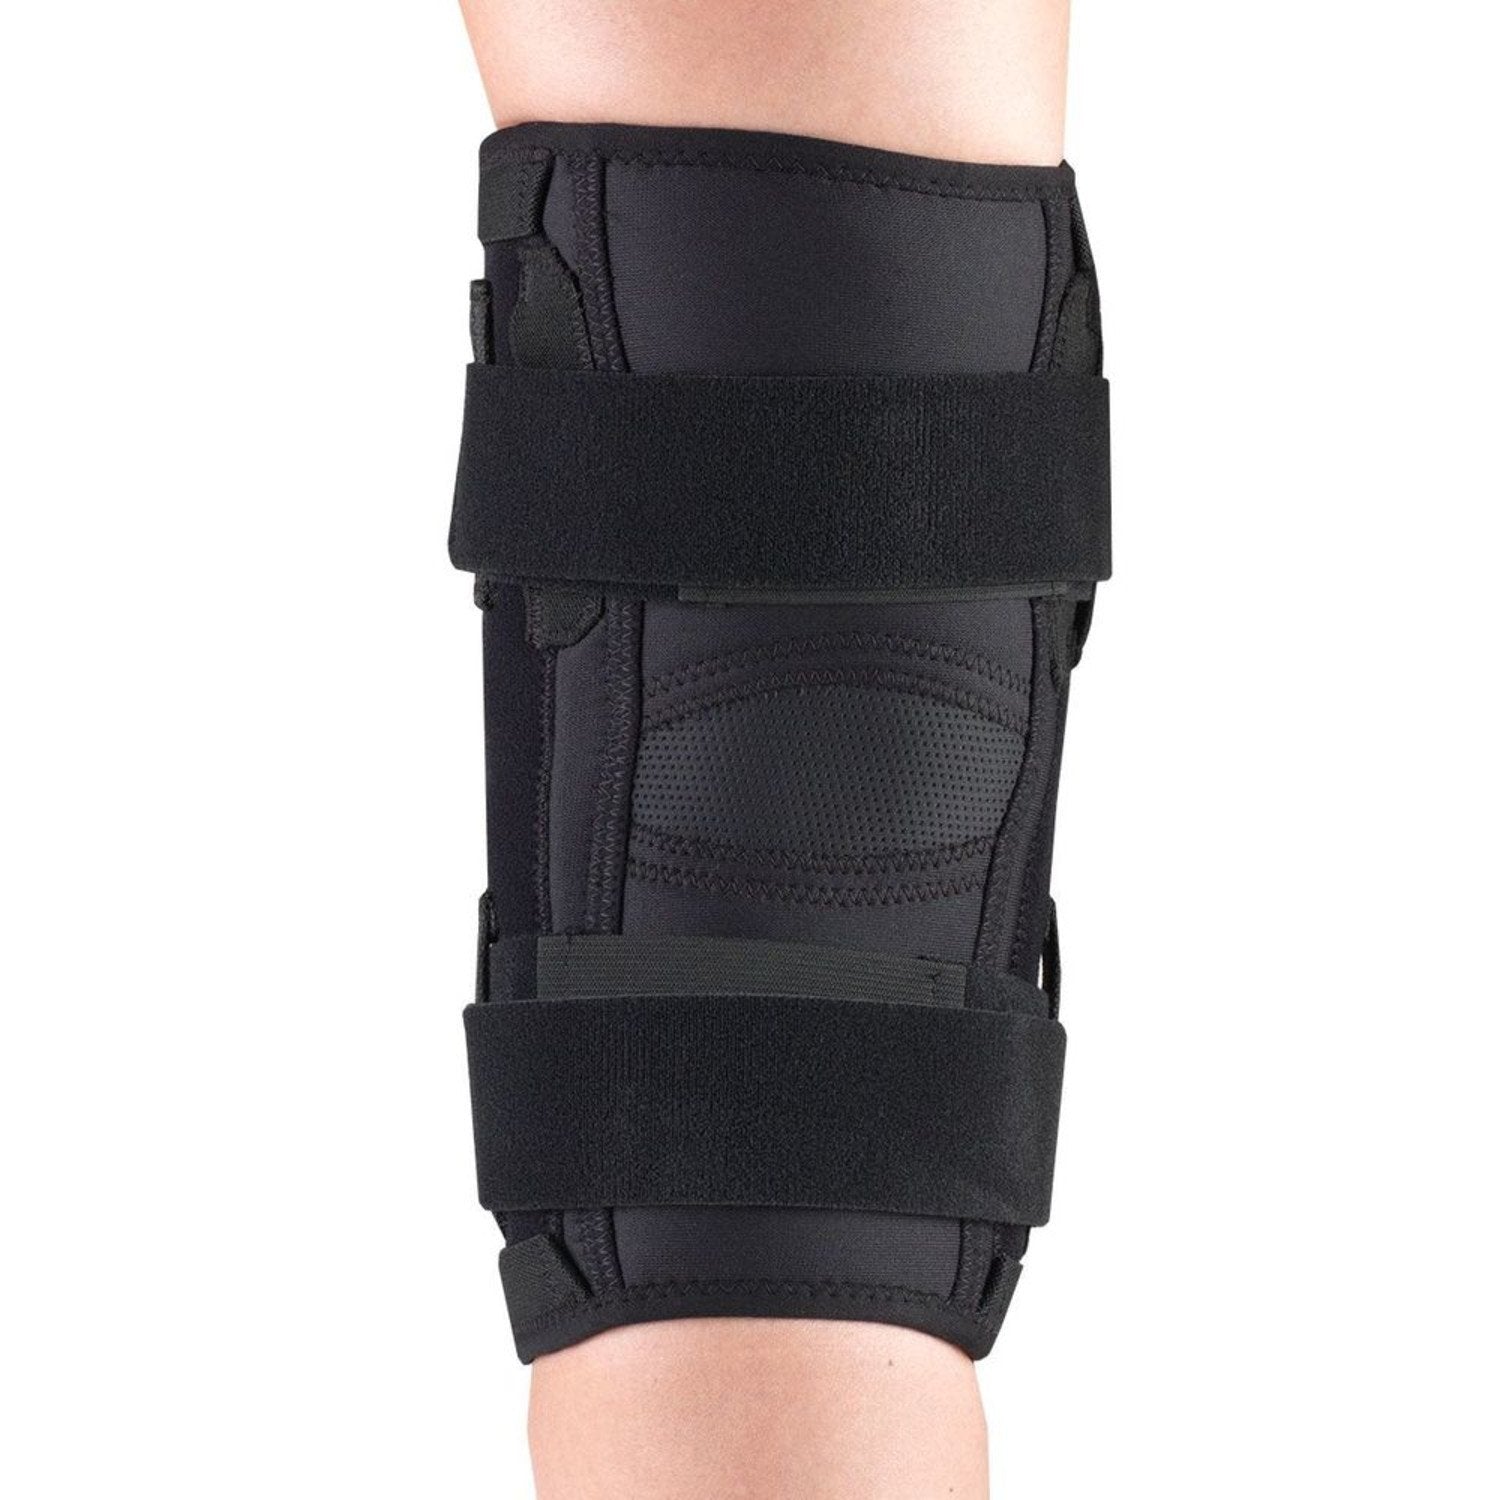 Neoprene Knee Support - Stabilizer Pad by OTC